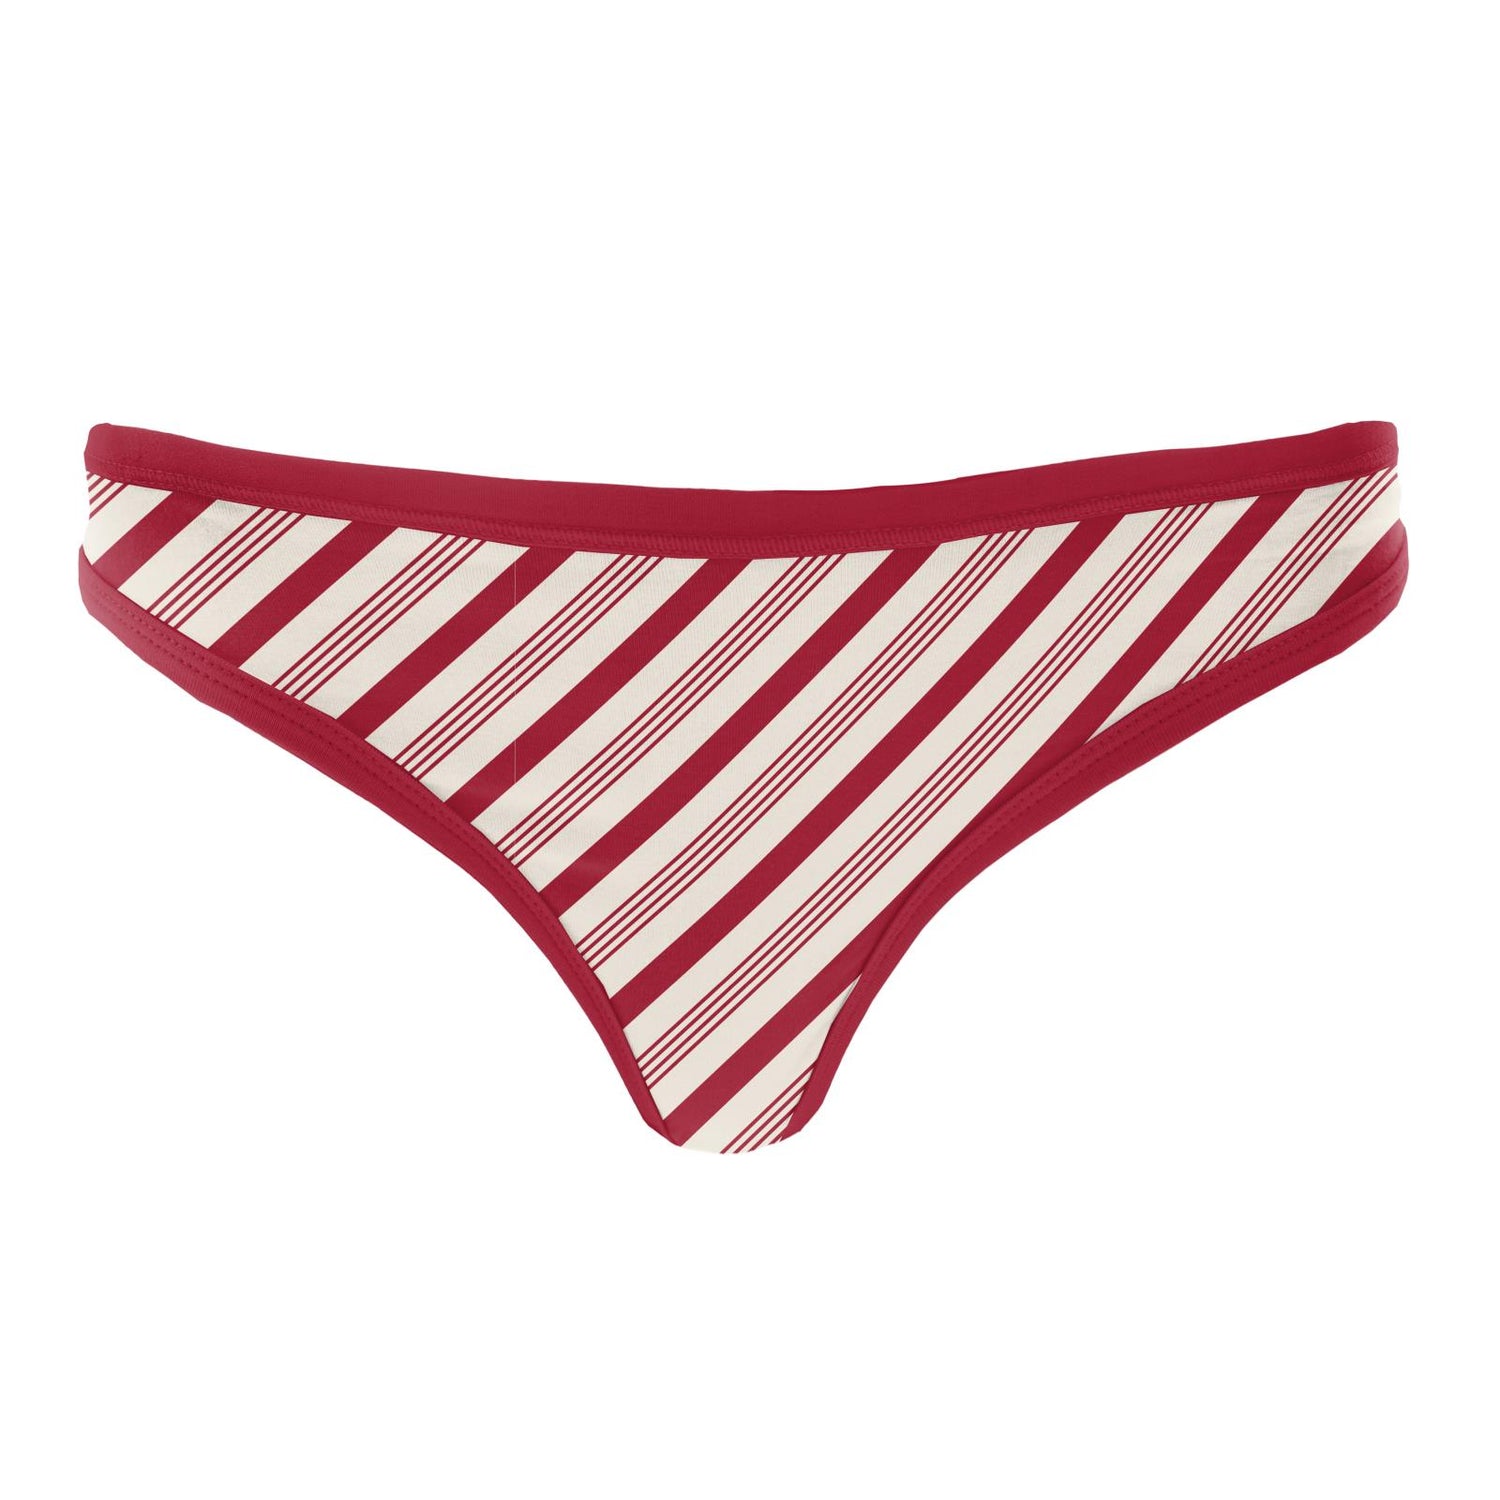 Women's Print Classic Thong in Crimson Candy Cane Stripe